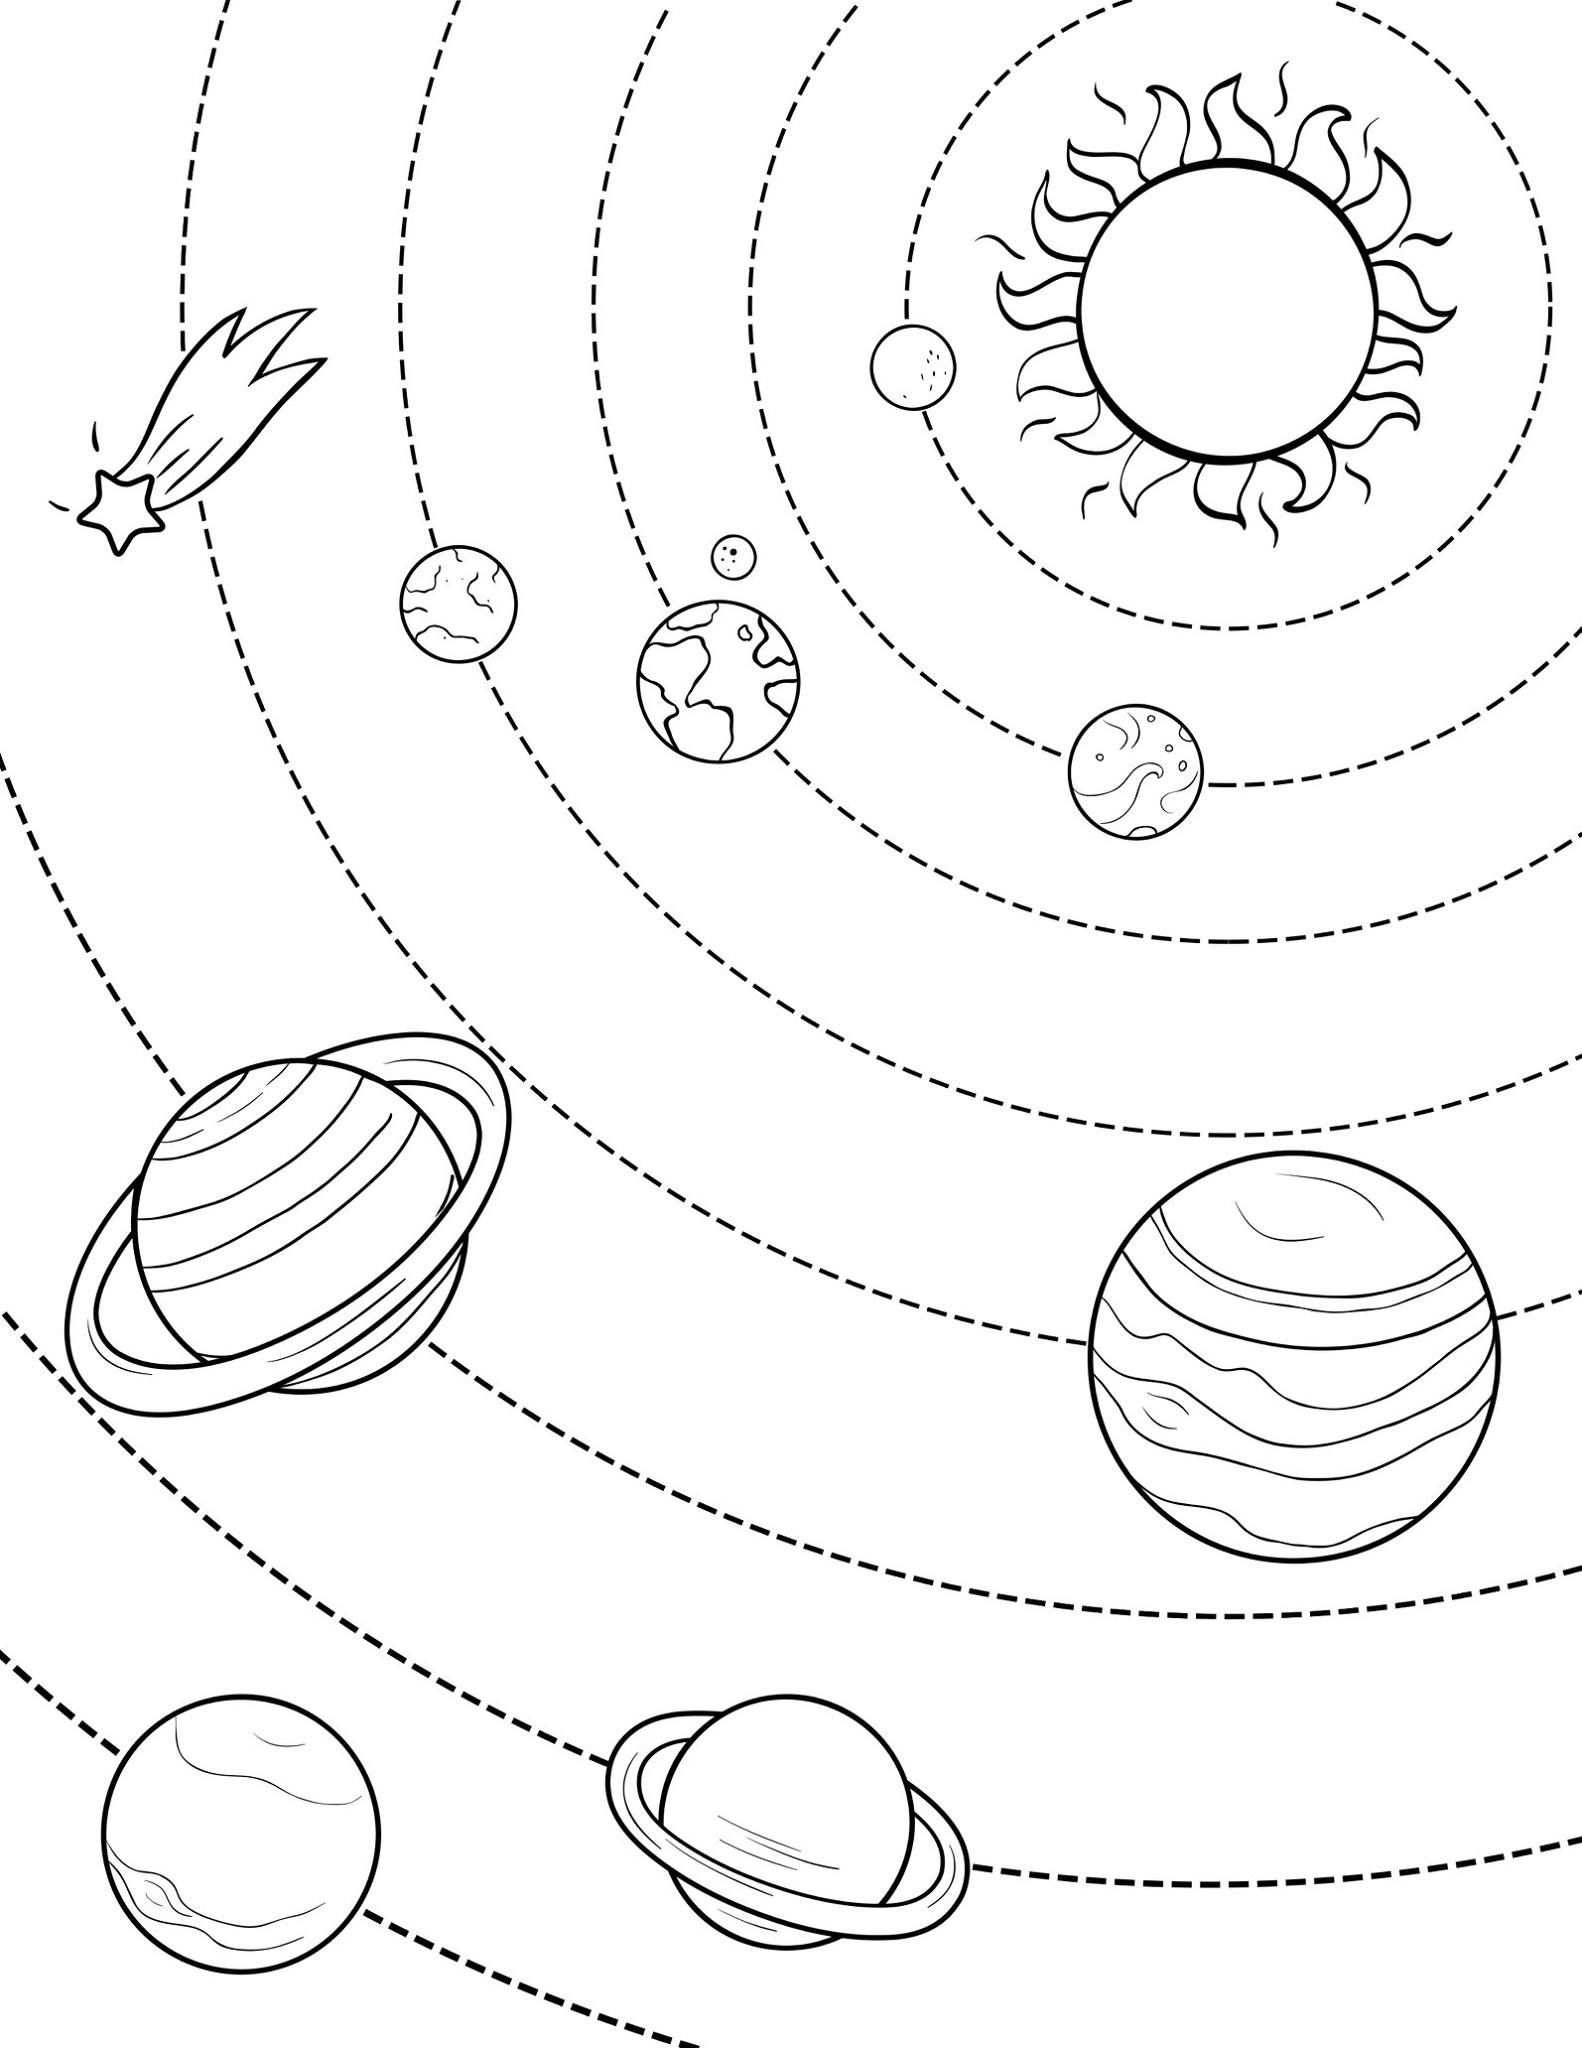 Kleurplaat Zonnestelsel